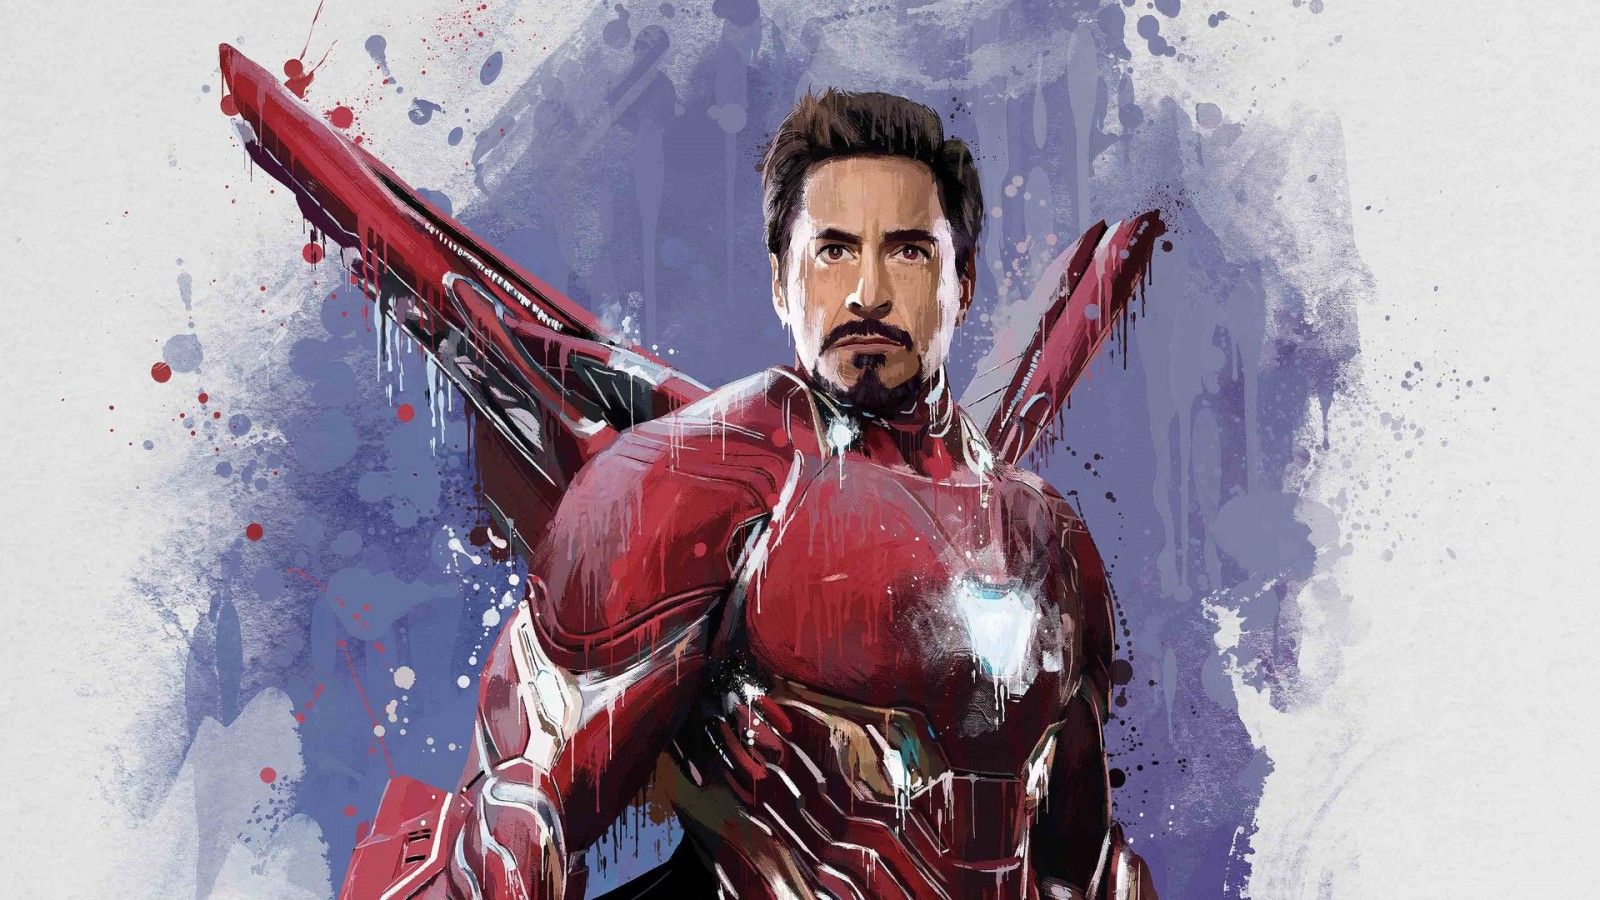 Iron Man Avengers Infinity War Suit Wallpaper